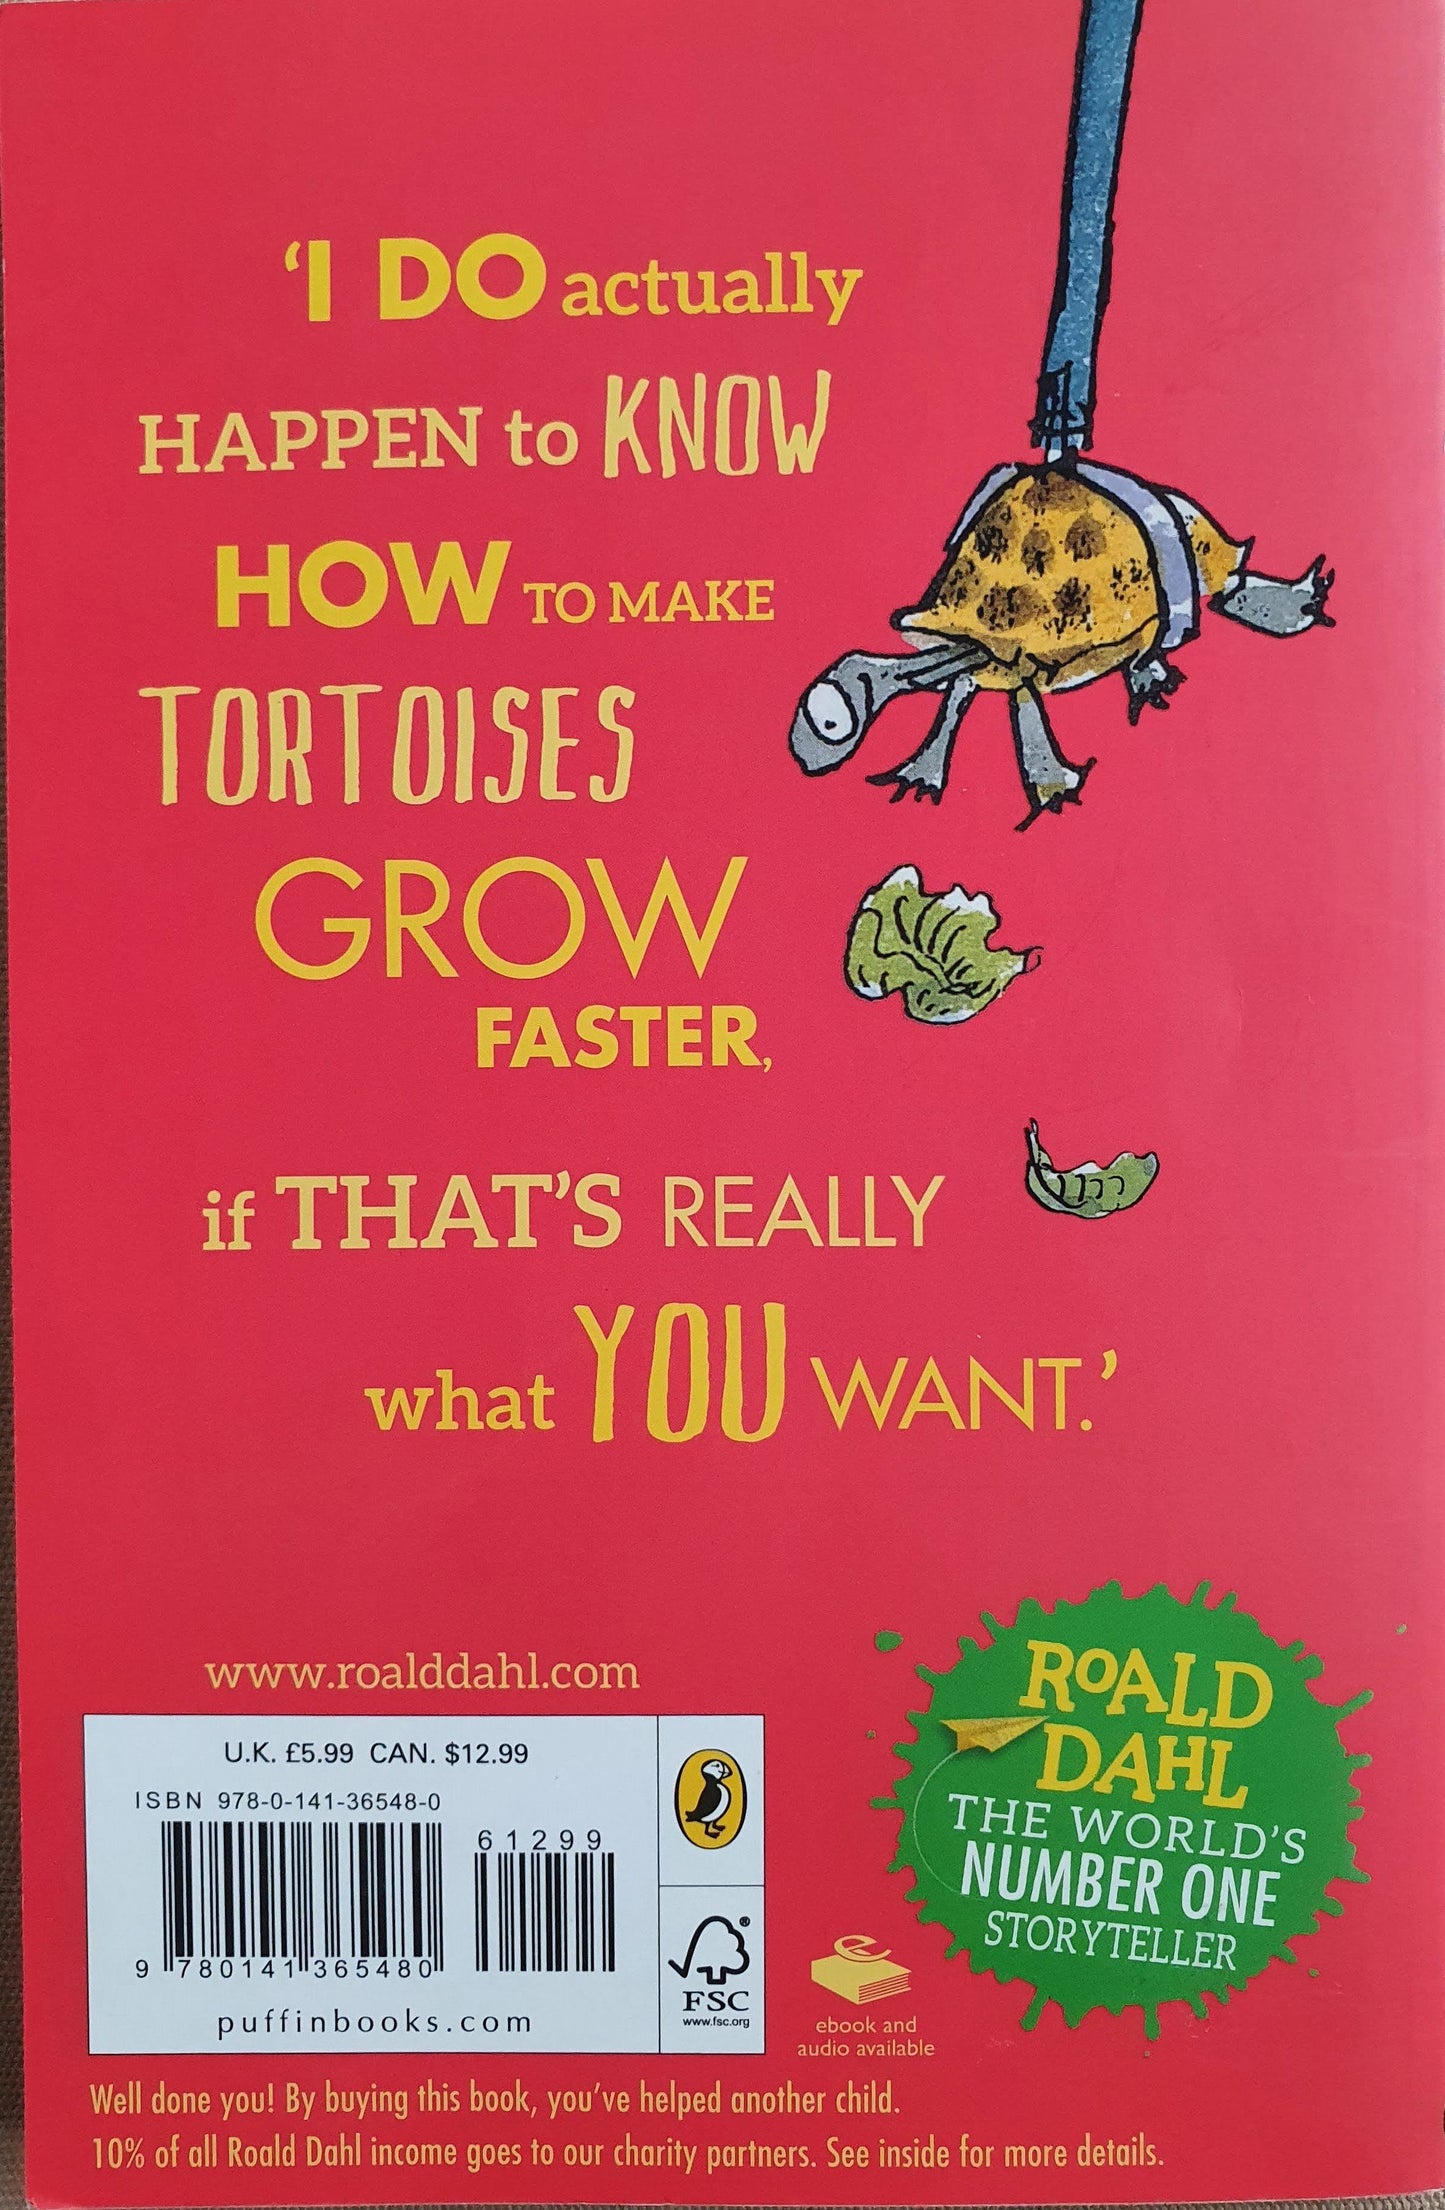 Esio Trot Like New Roald Dahl  (4615786201143)